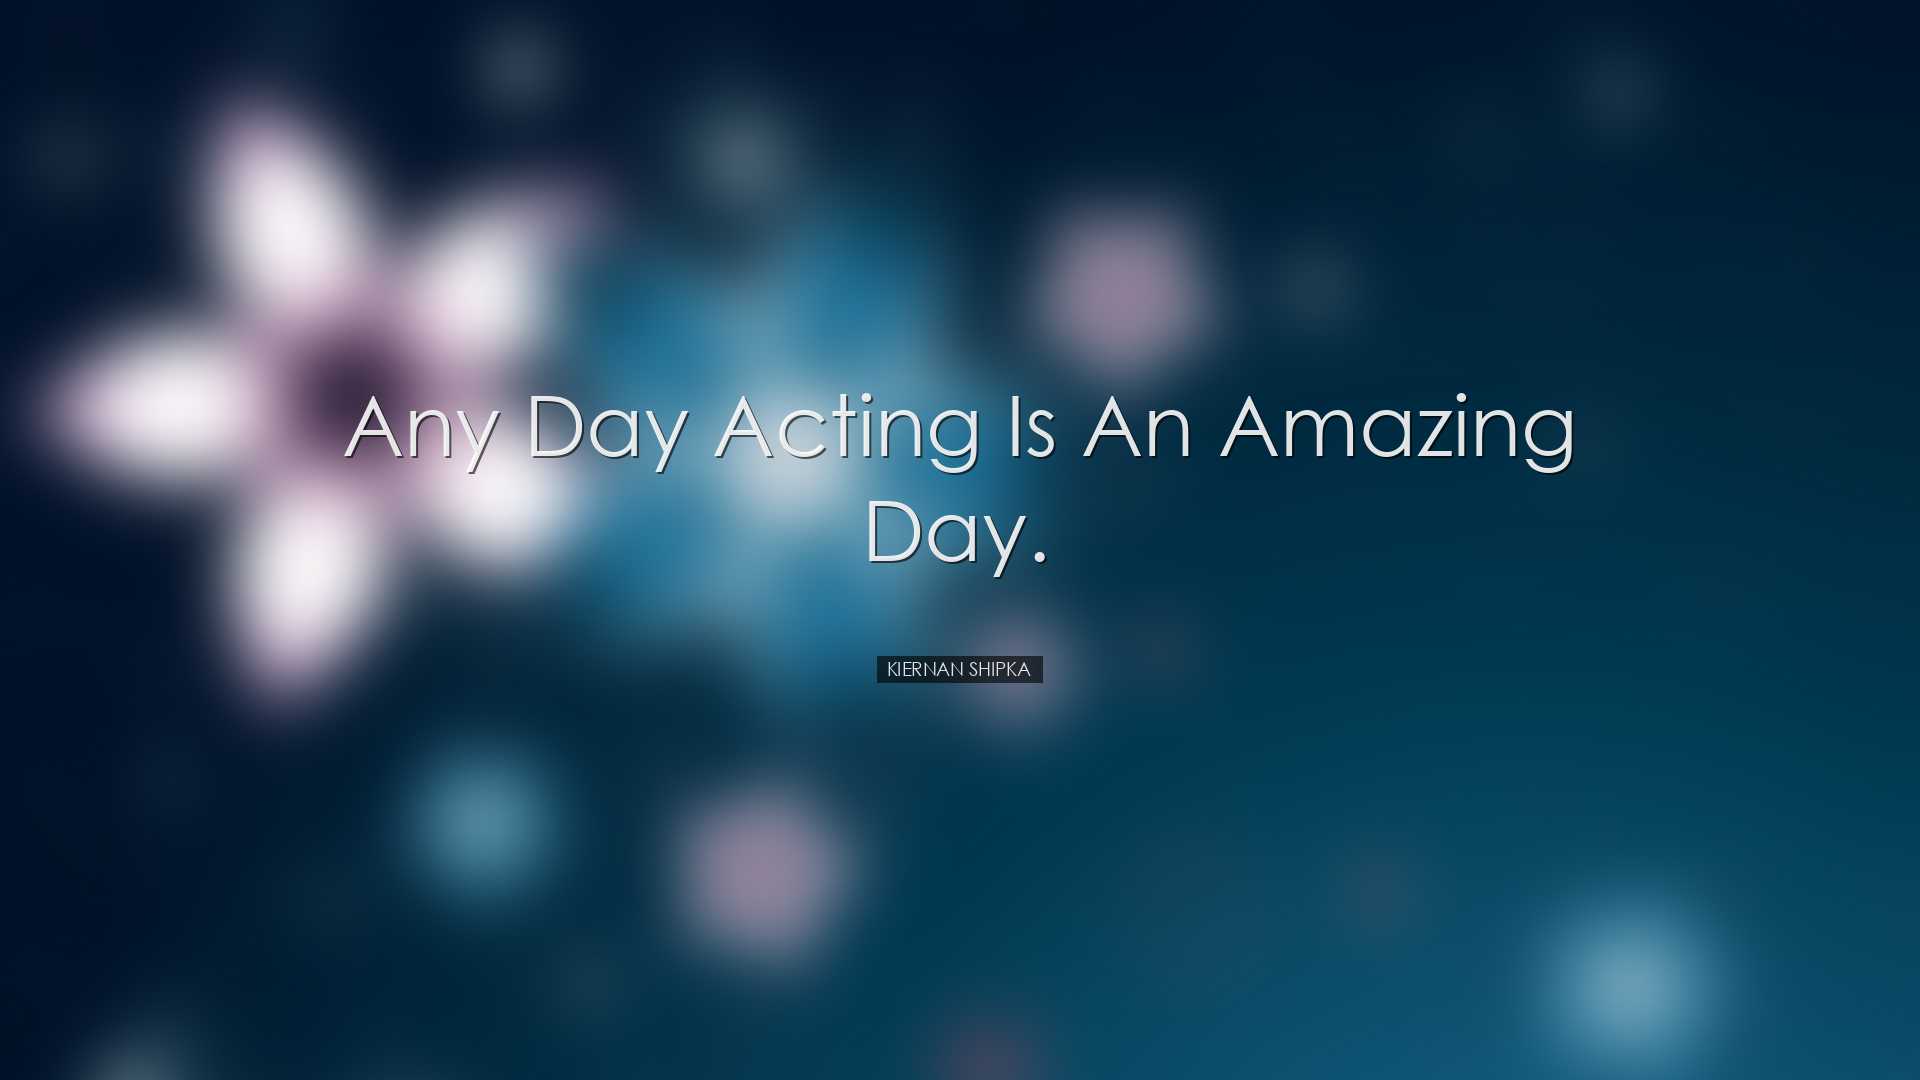 Any day acting is an amazing day. - Kiernan Shipka